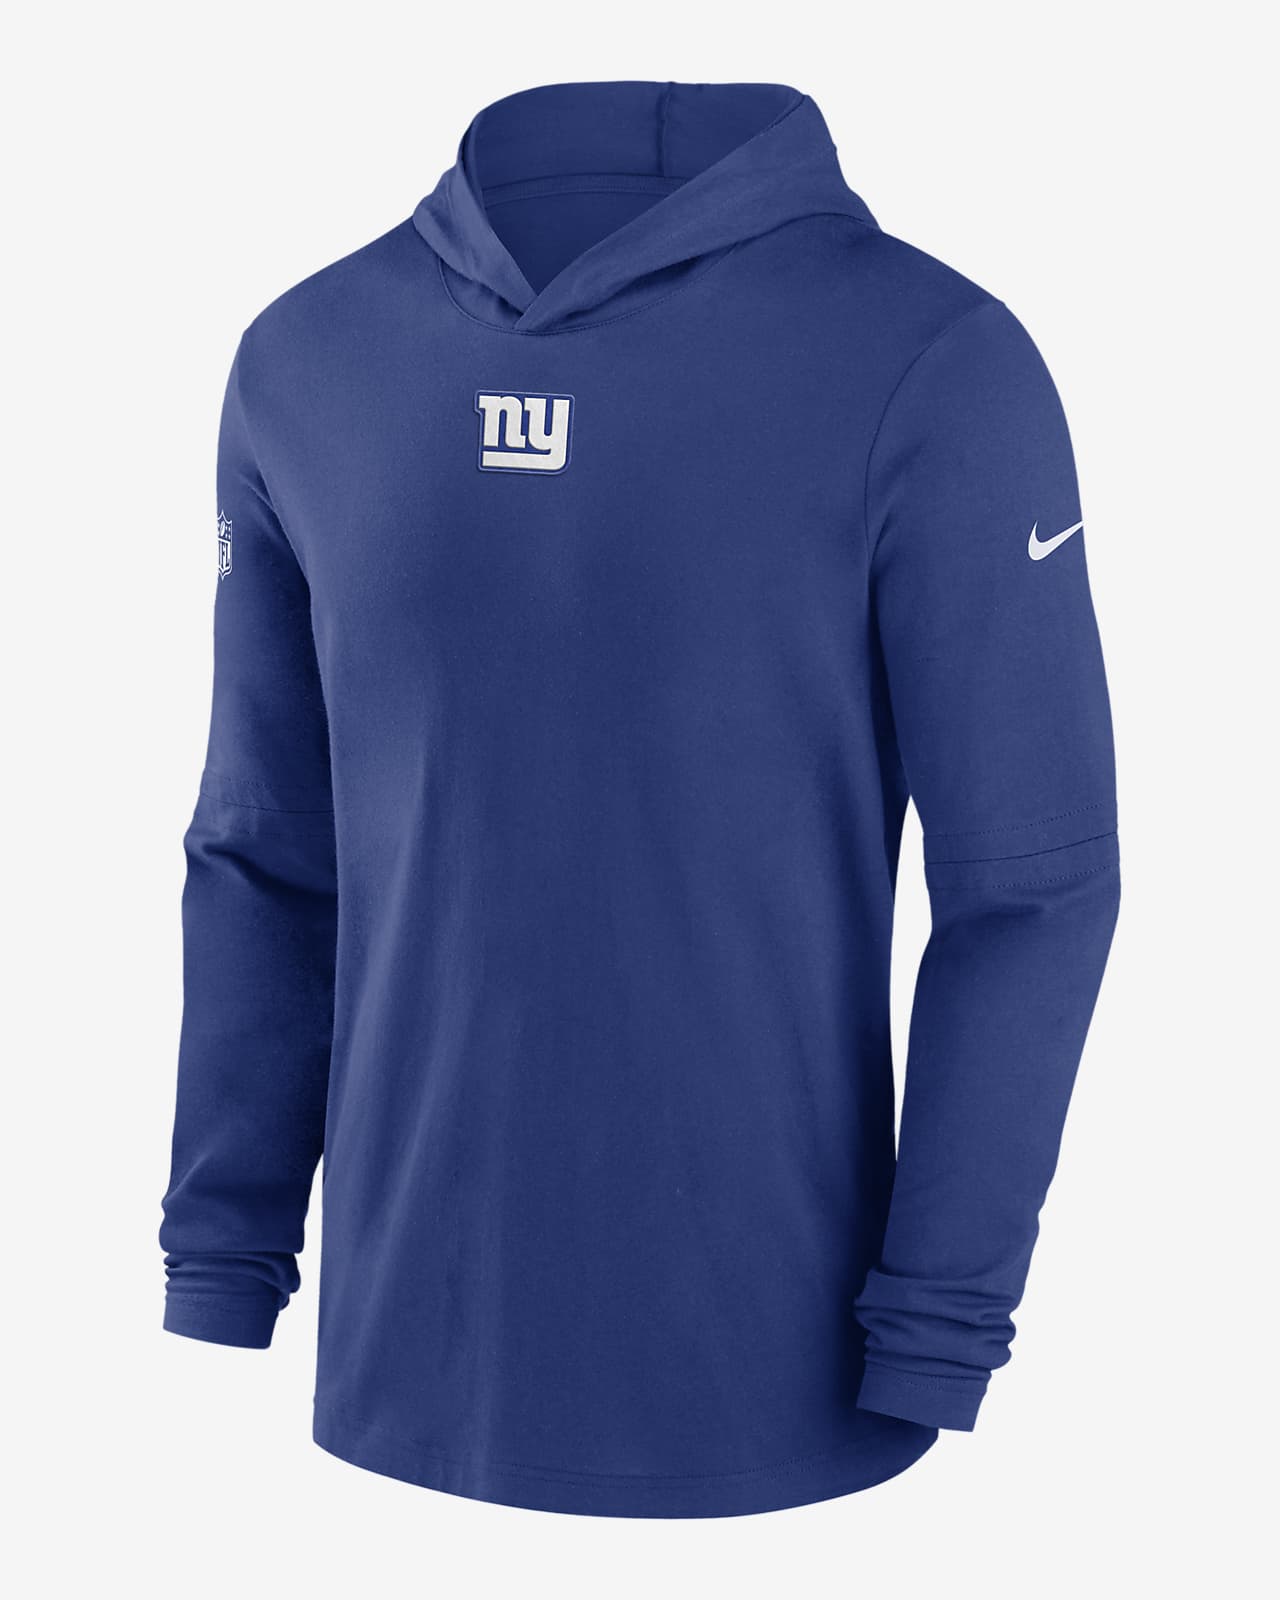 New York Giants Sideline Men's Nike Dri-FIT NFL Long-Sleeve Hooded Top. Nike .com